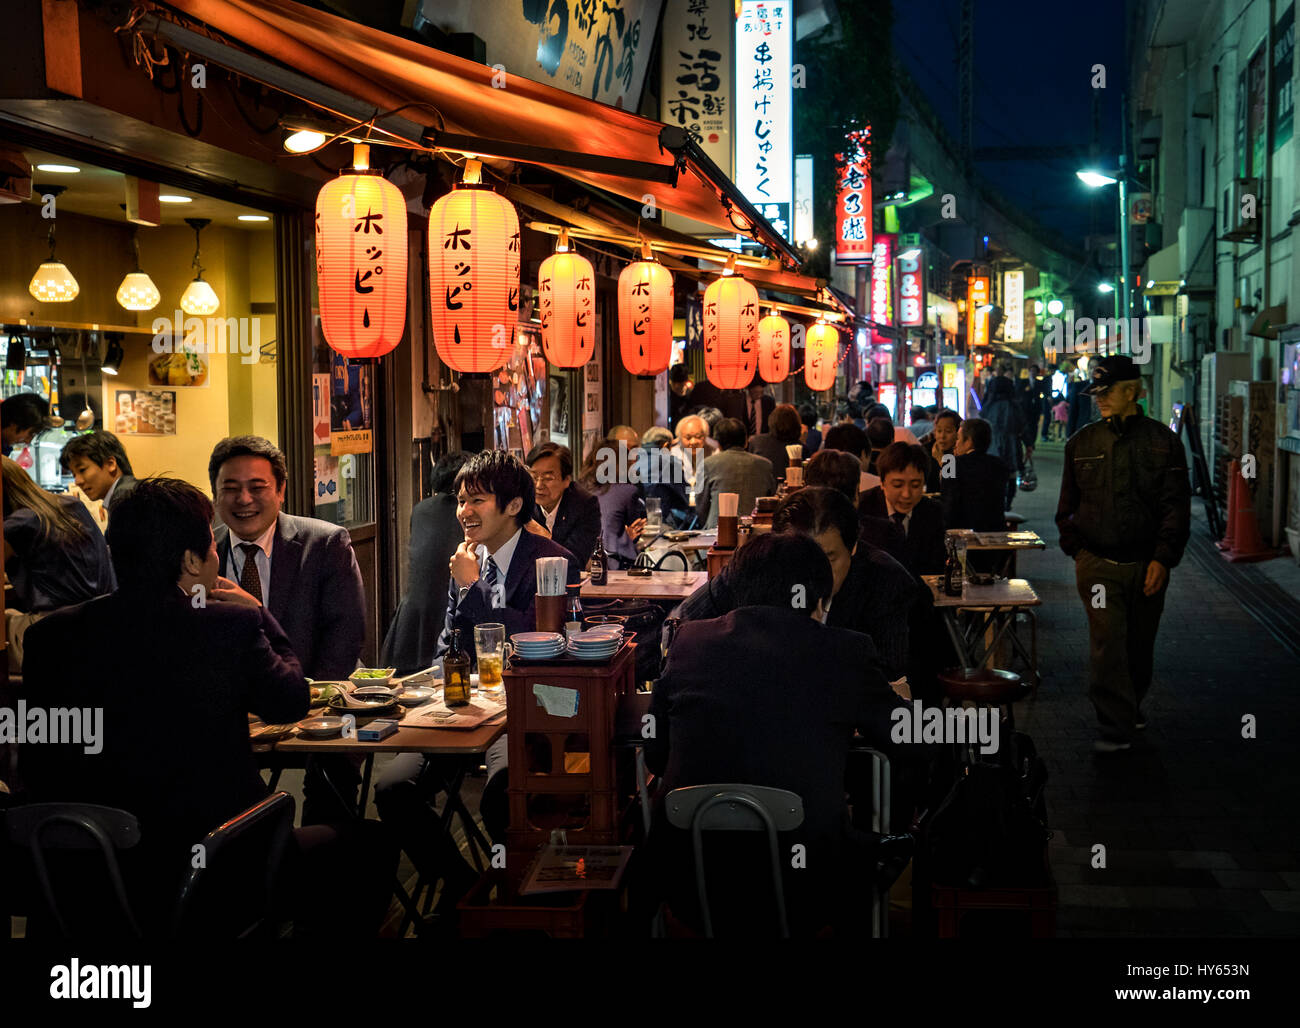 Japon, Tokyo, Ueno, Izakaya, salarymen verre après avoir daywork. Banque D'Images